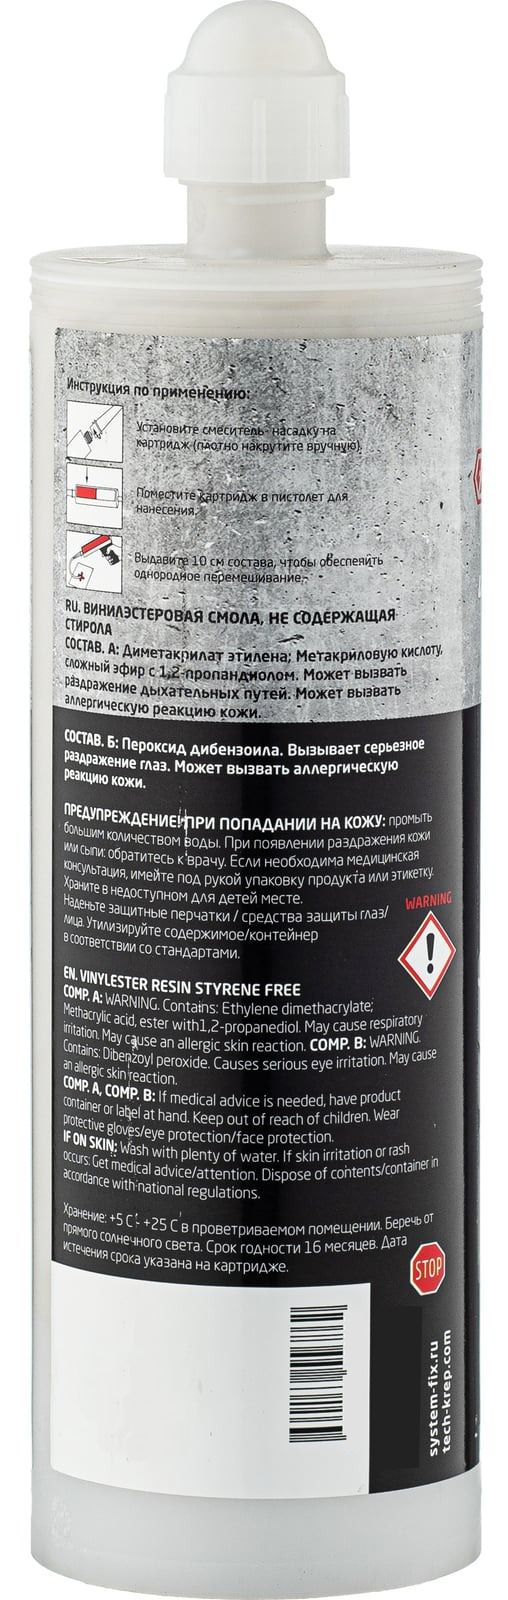 Химический анкер на основе винилэстера зимний TECH-KREP TIT VE-200 PRO ARCTIC NEW, 300 мл - фото